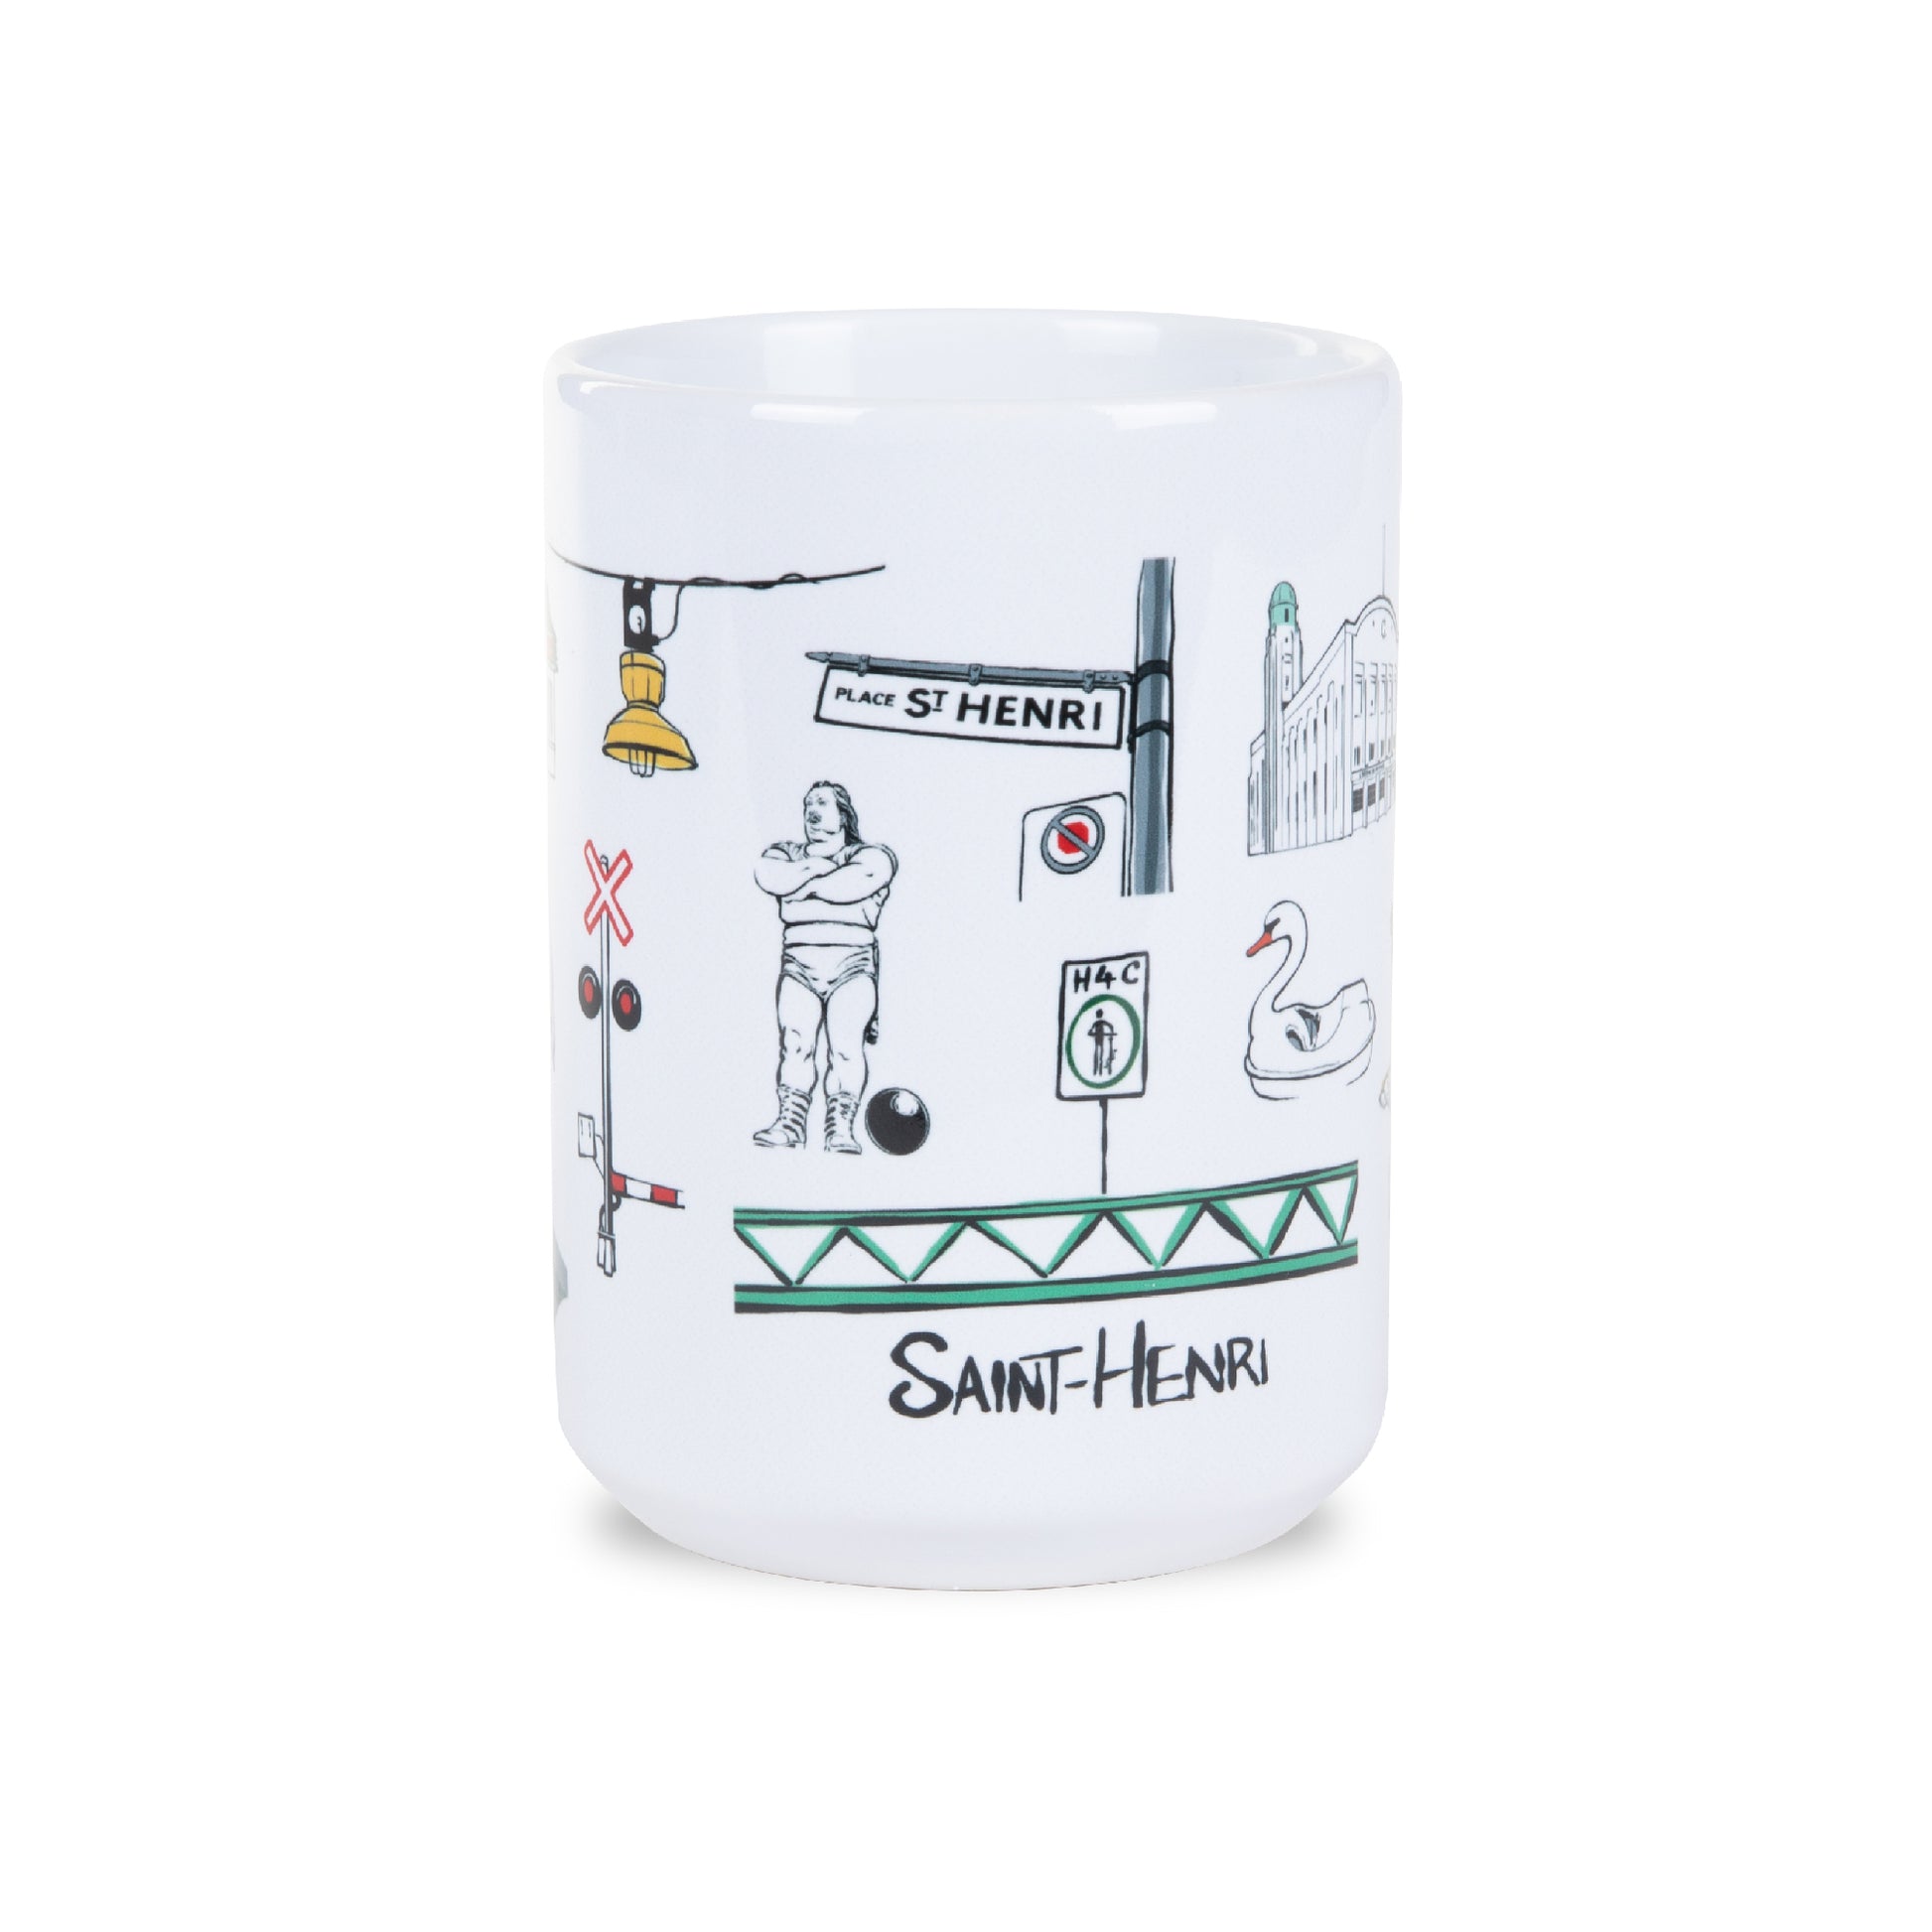 saint henri coffee mug, white ceramic, 15oz, illustrations, montreal landmarks, district doodles, louis cyr, beaudoin bridge, swan, h4c, atwater light, train crossing